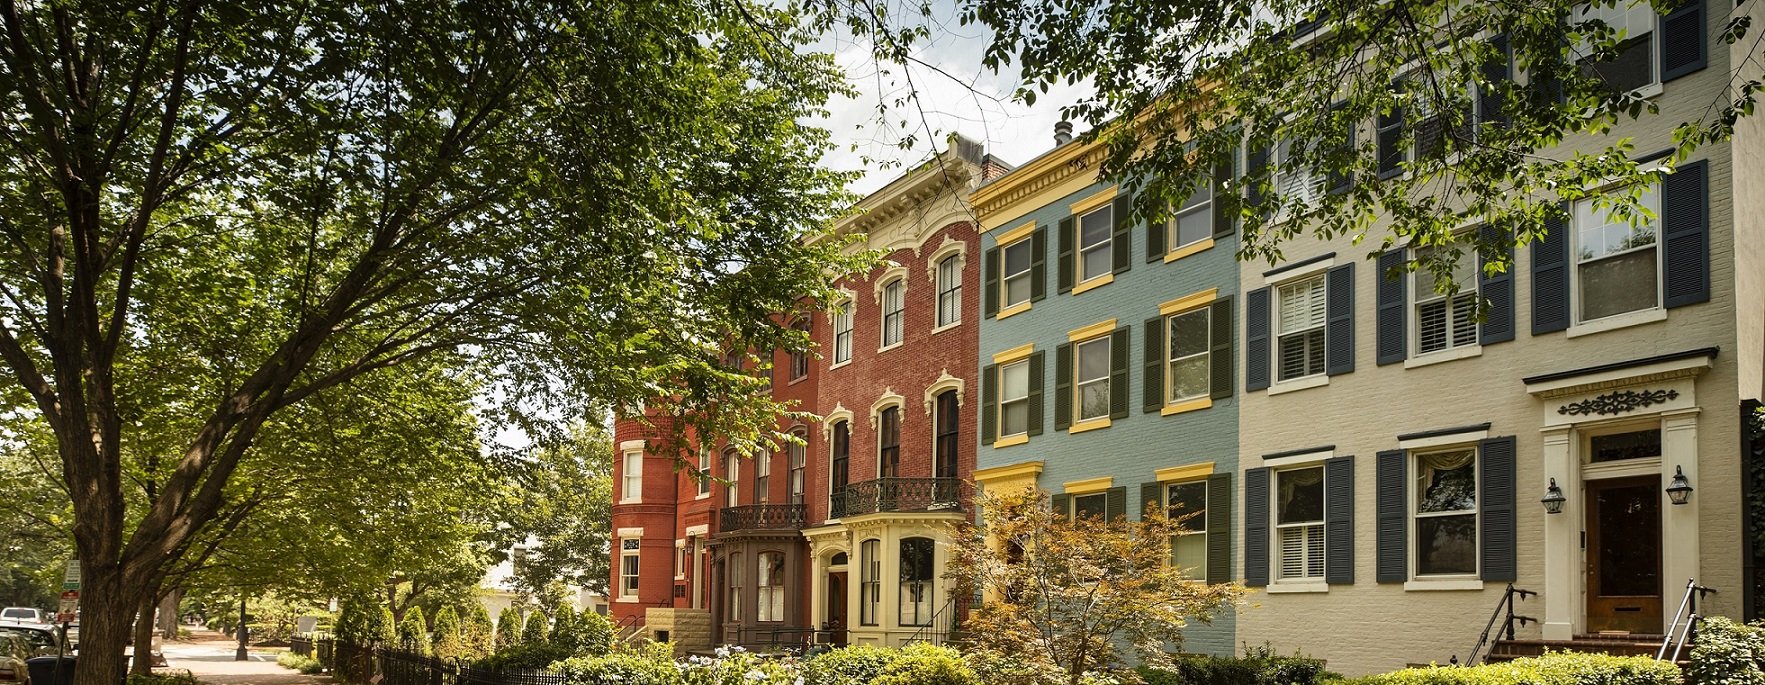 Image of residential neighborhood in DC